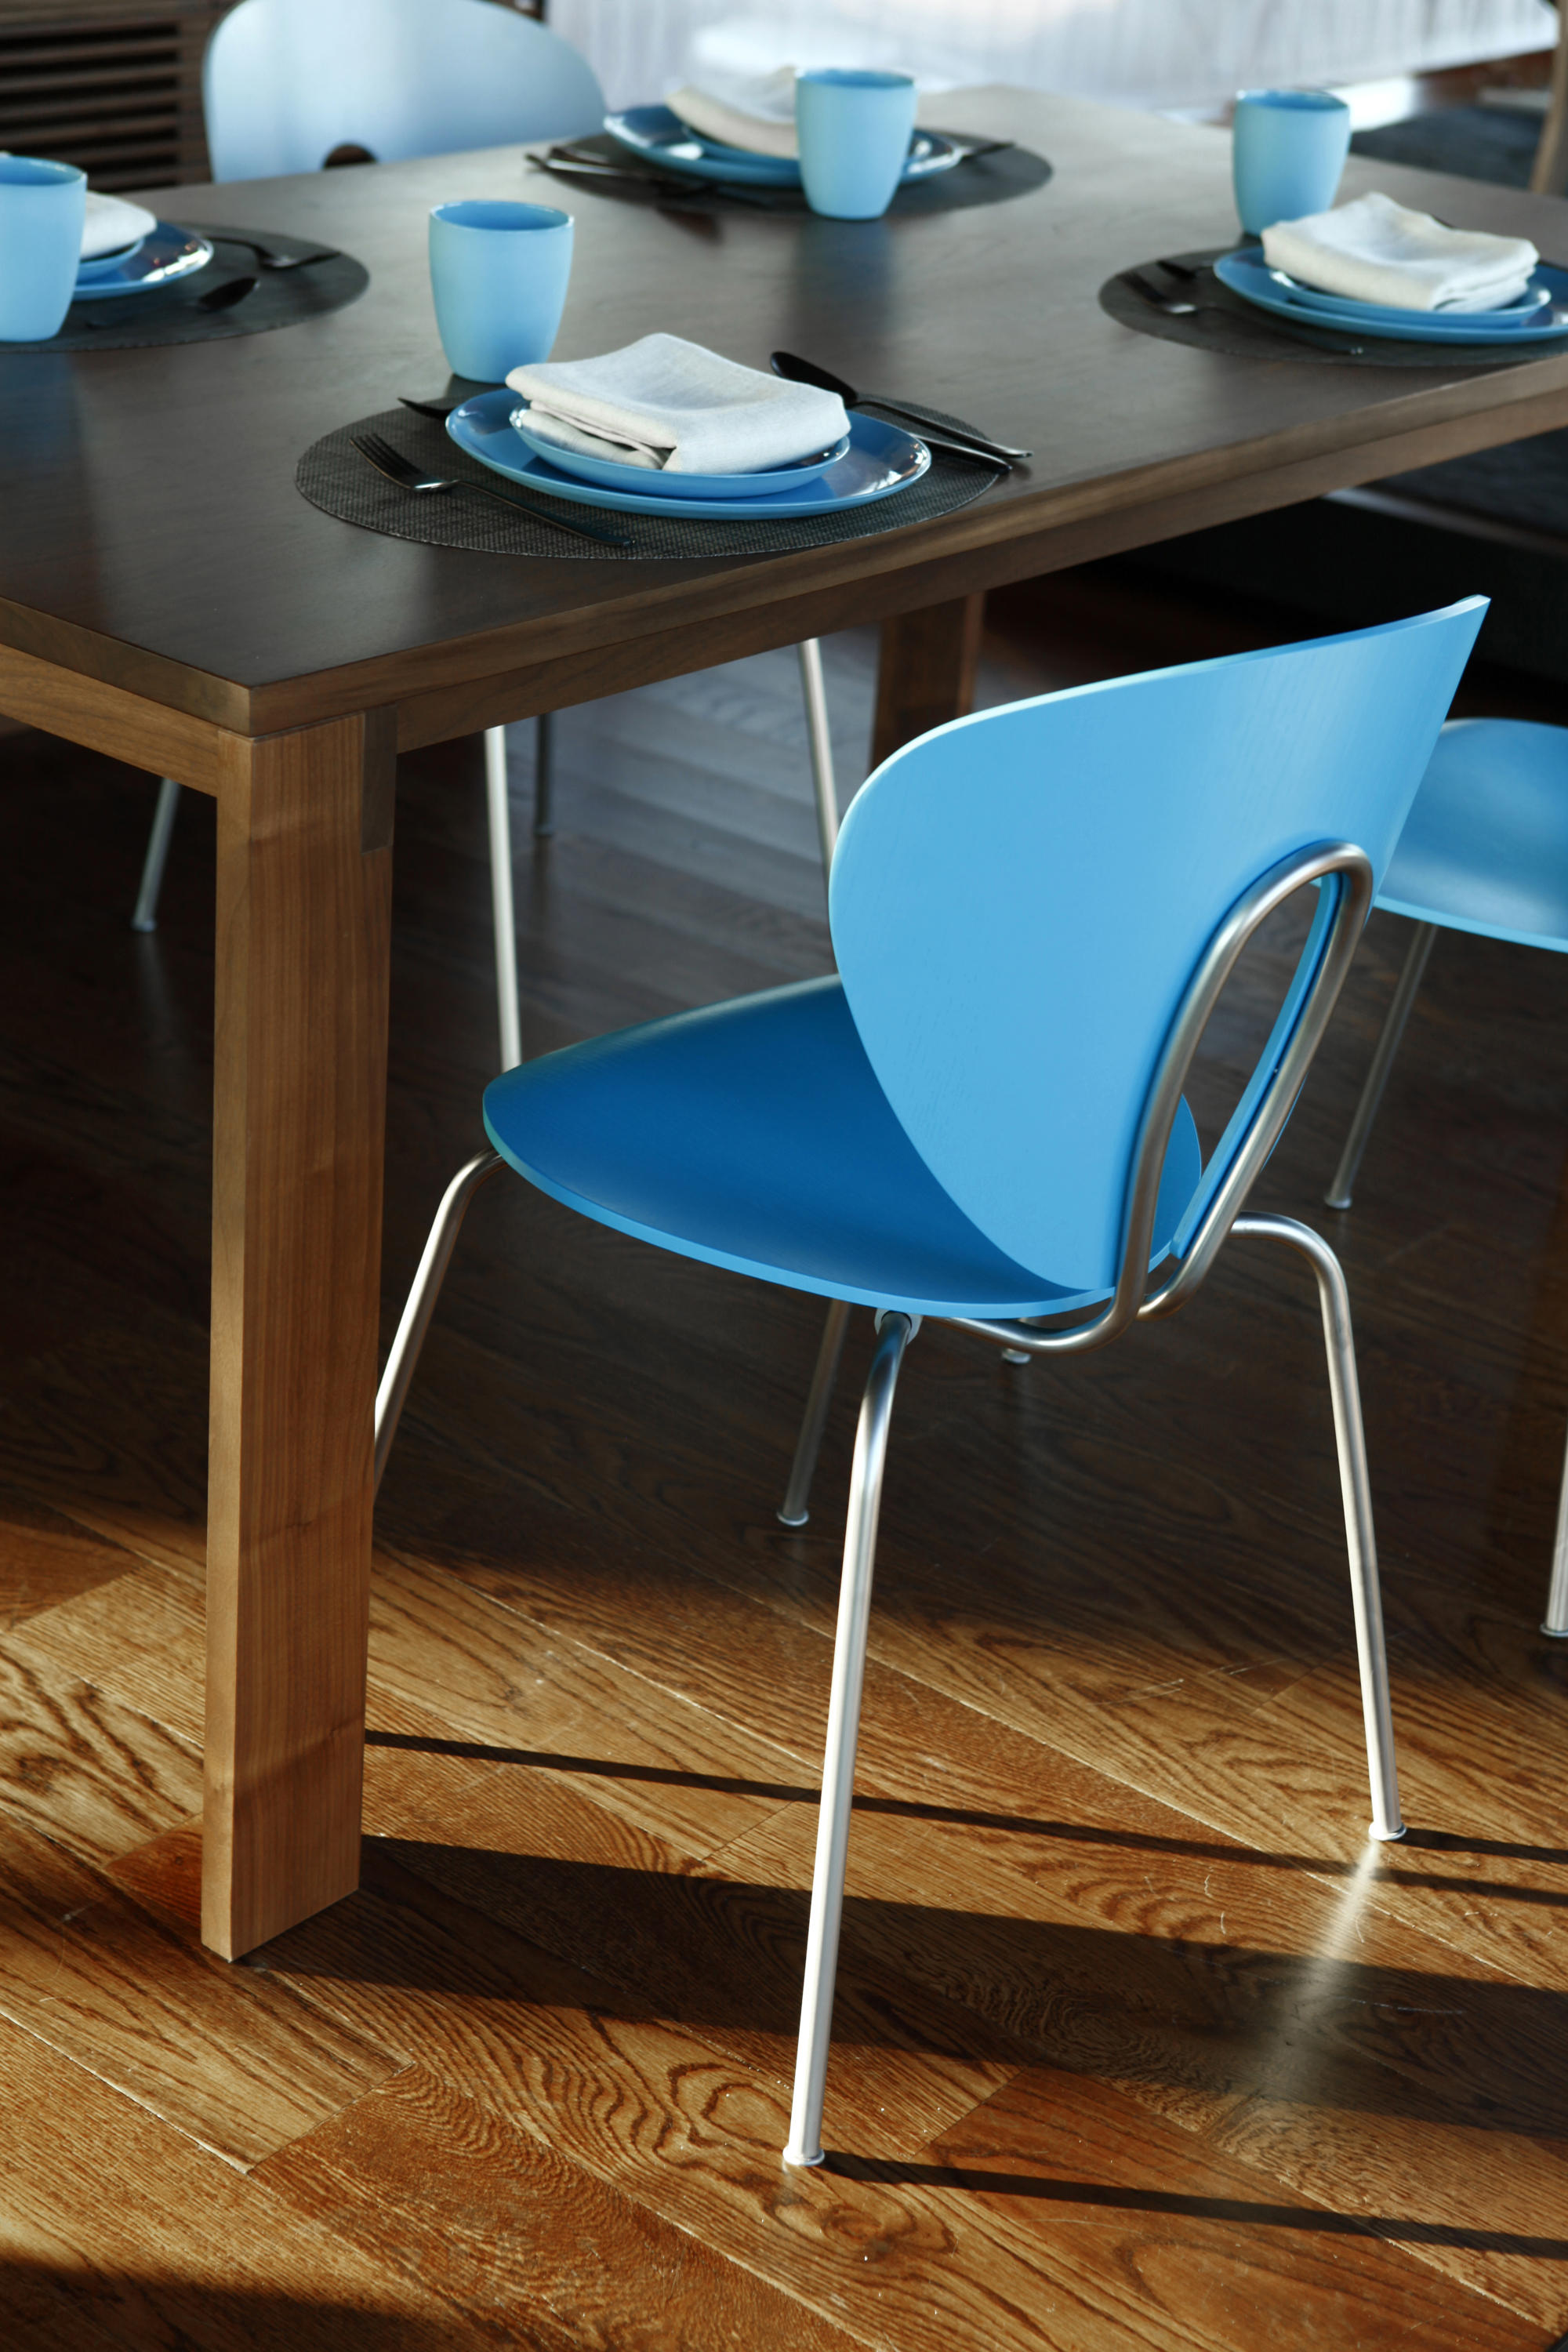 GLOBUS - Multipurpose chairs from STUA | Architonic